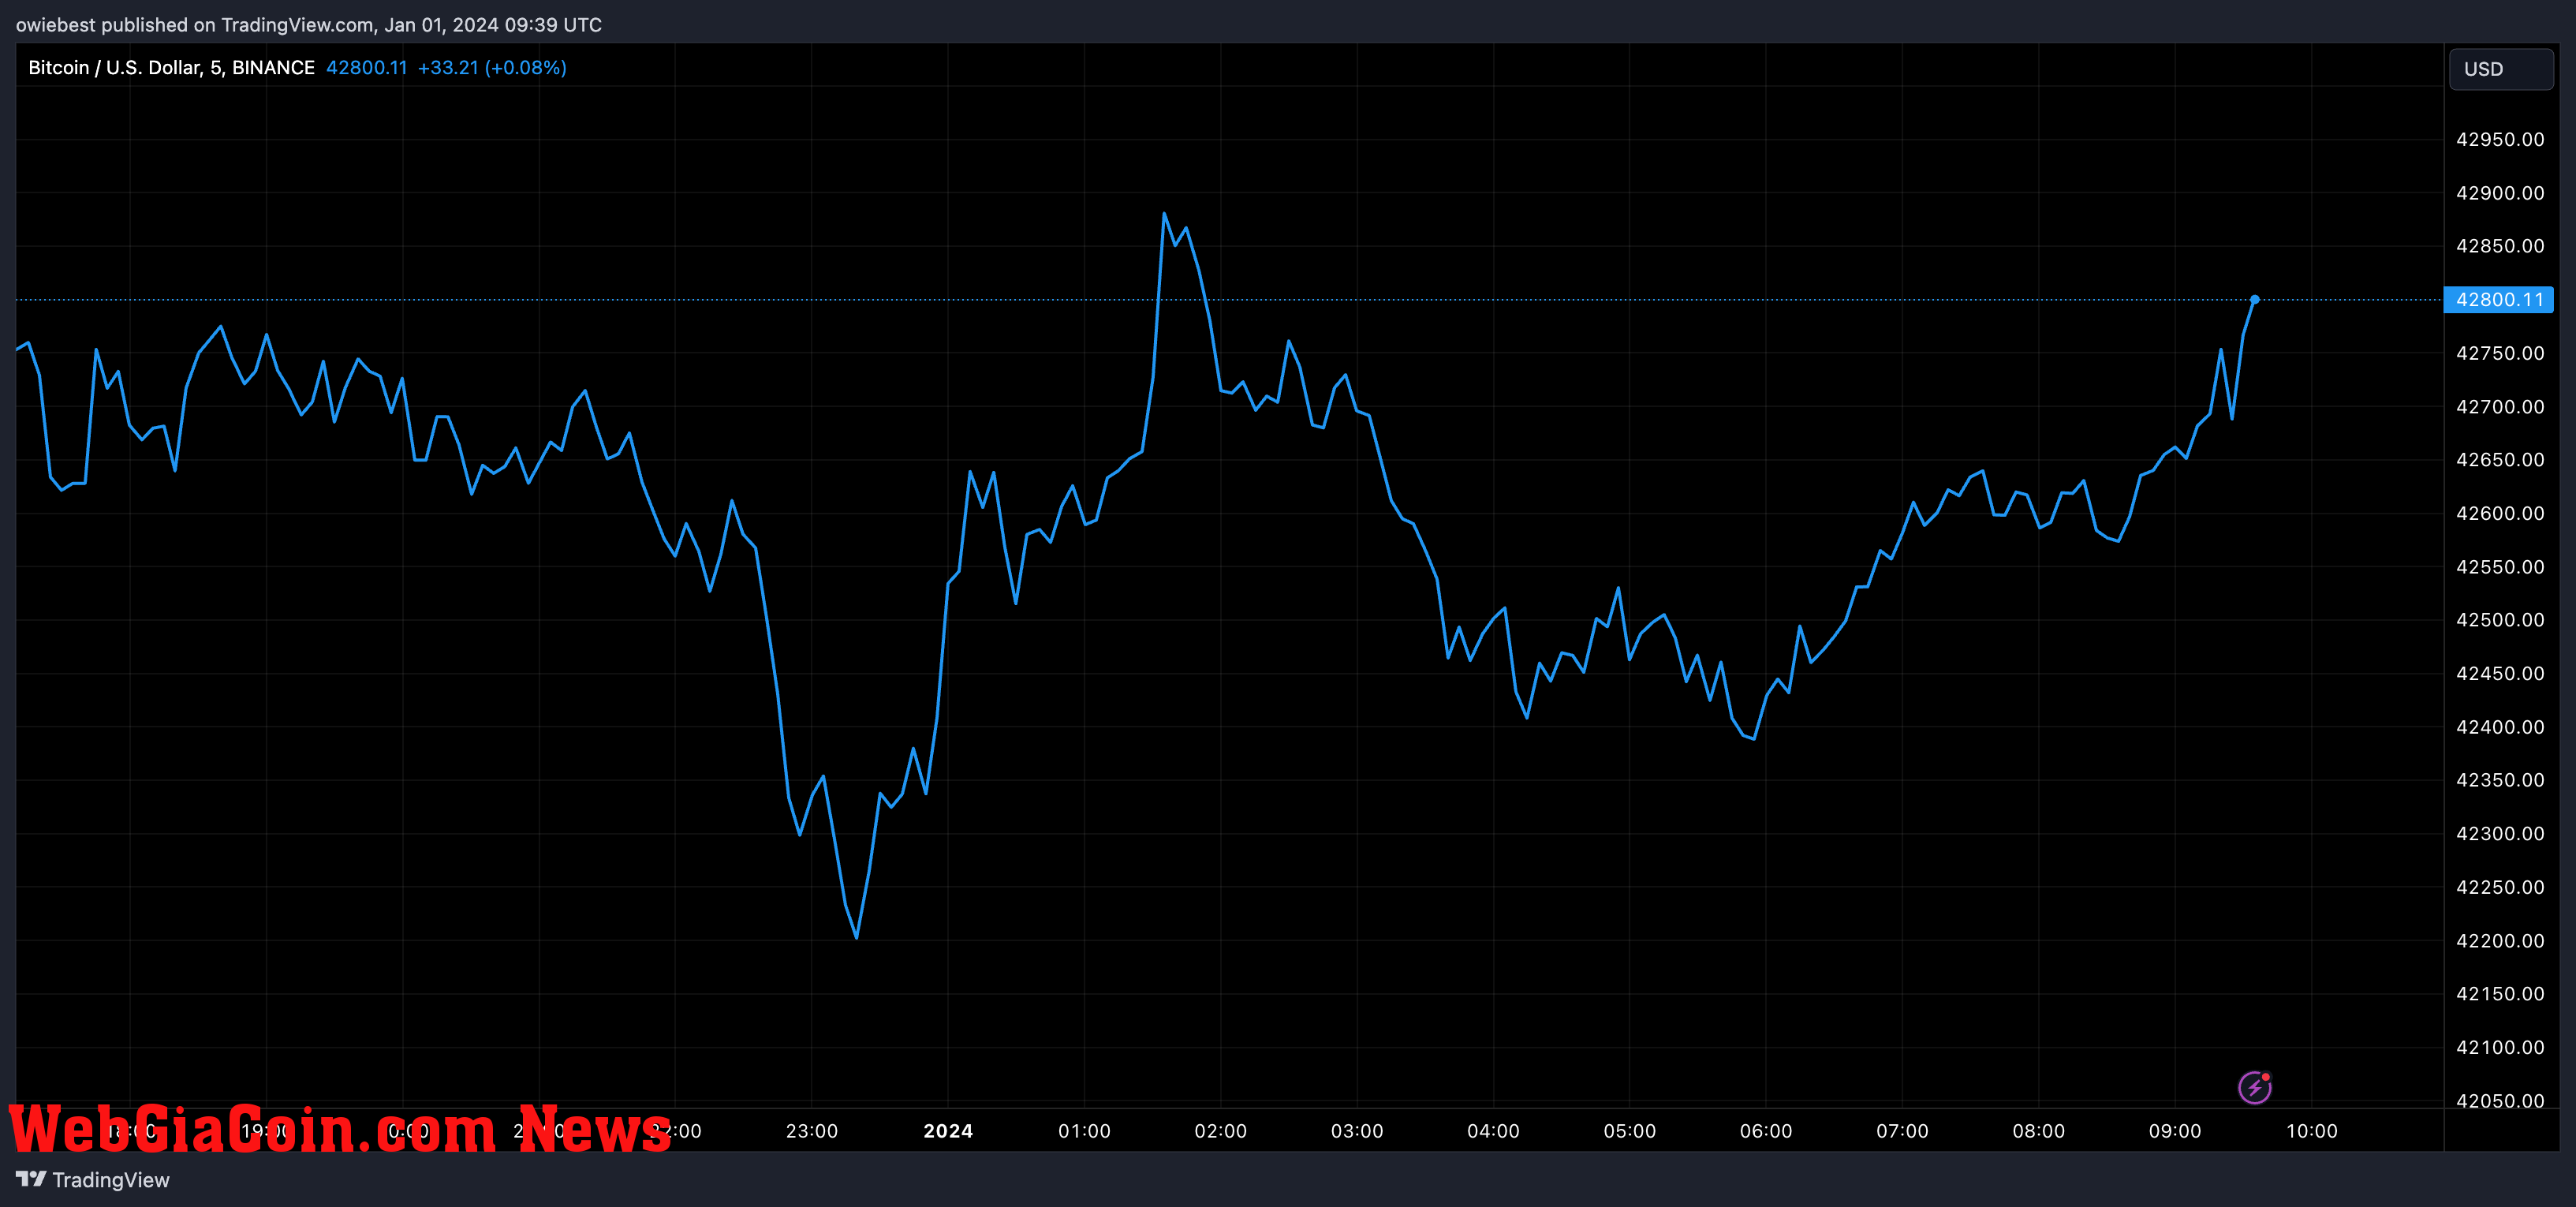 Bitcoin price chart from Tradingview.com (Crypto analyst)